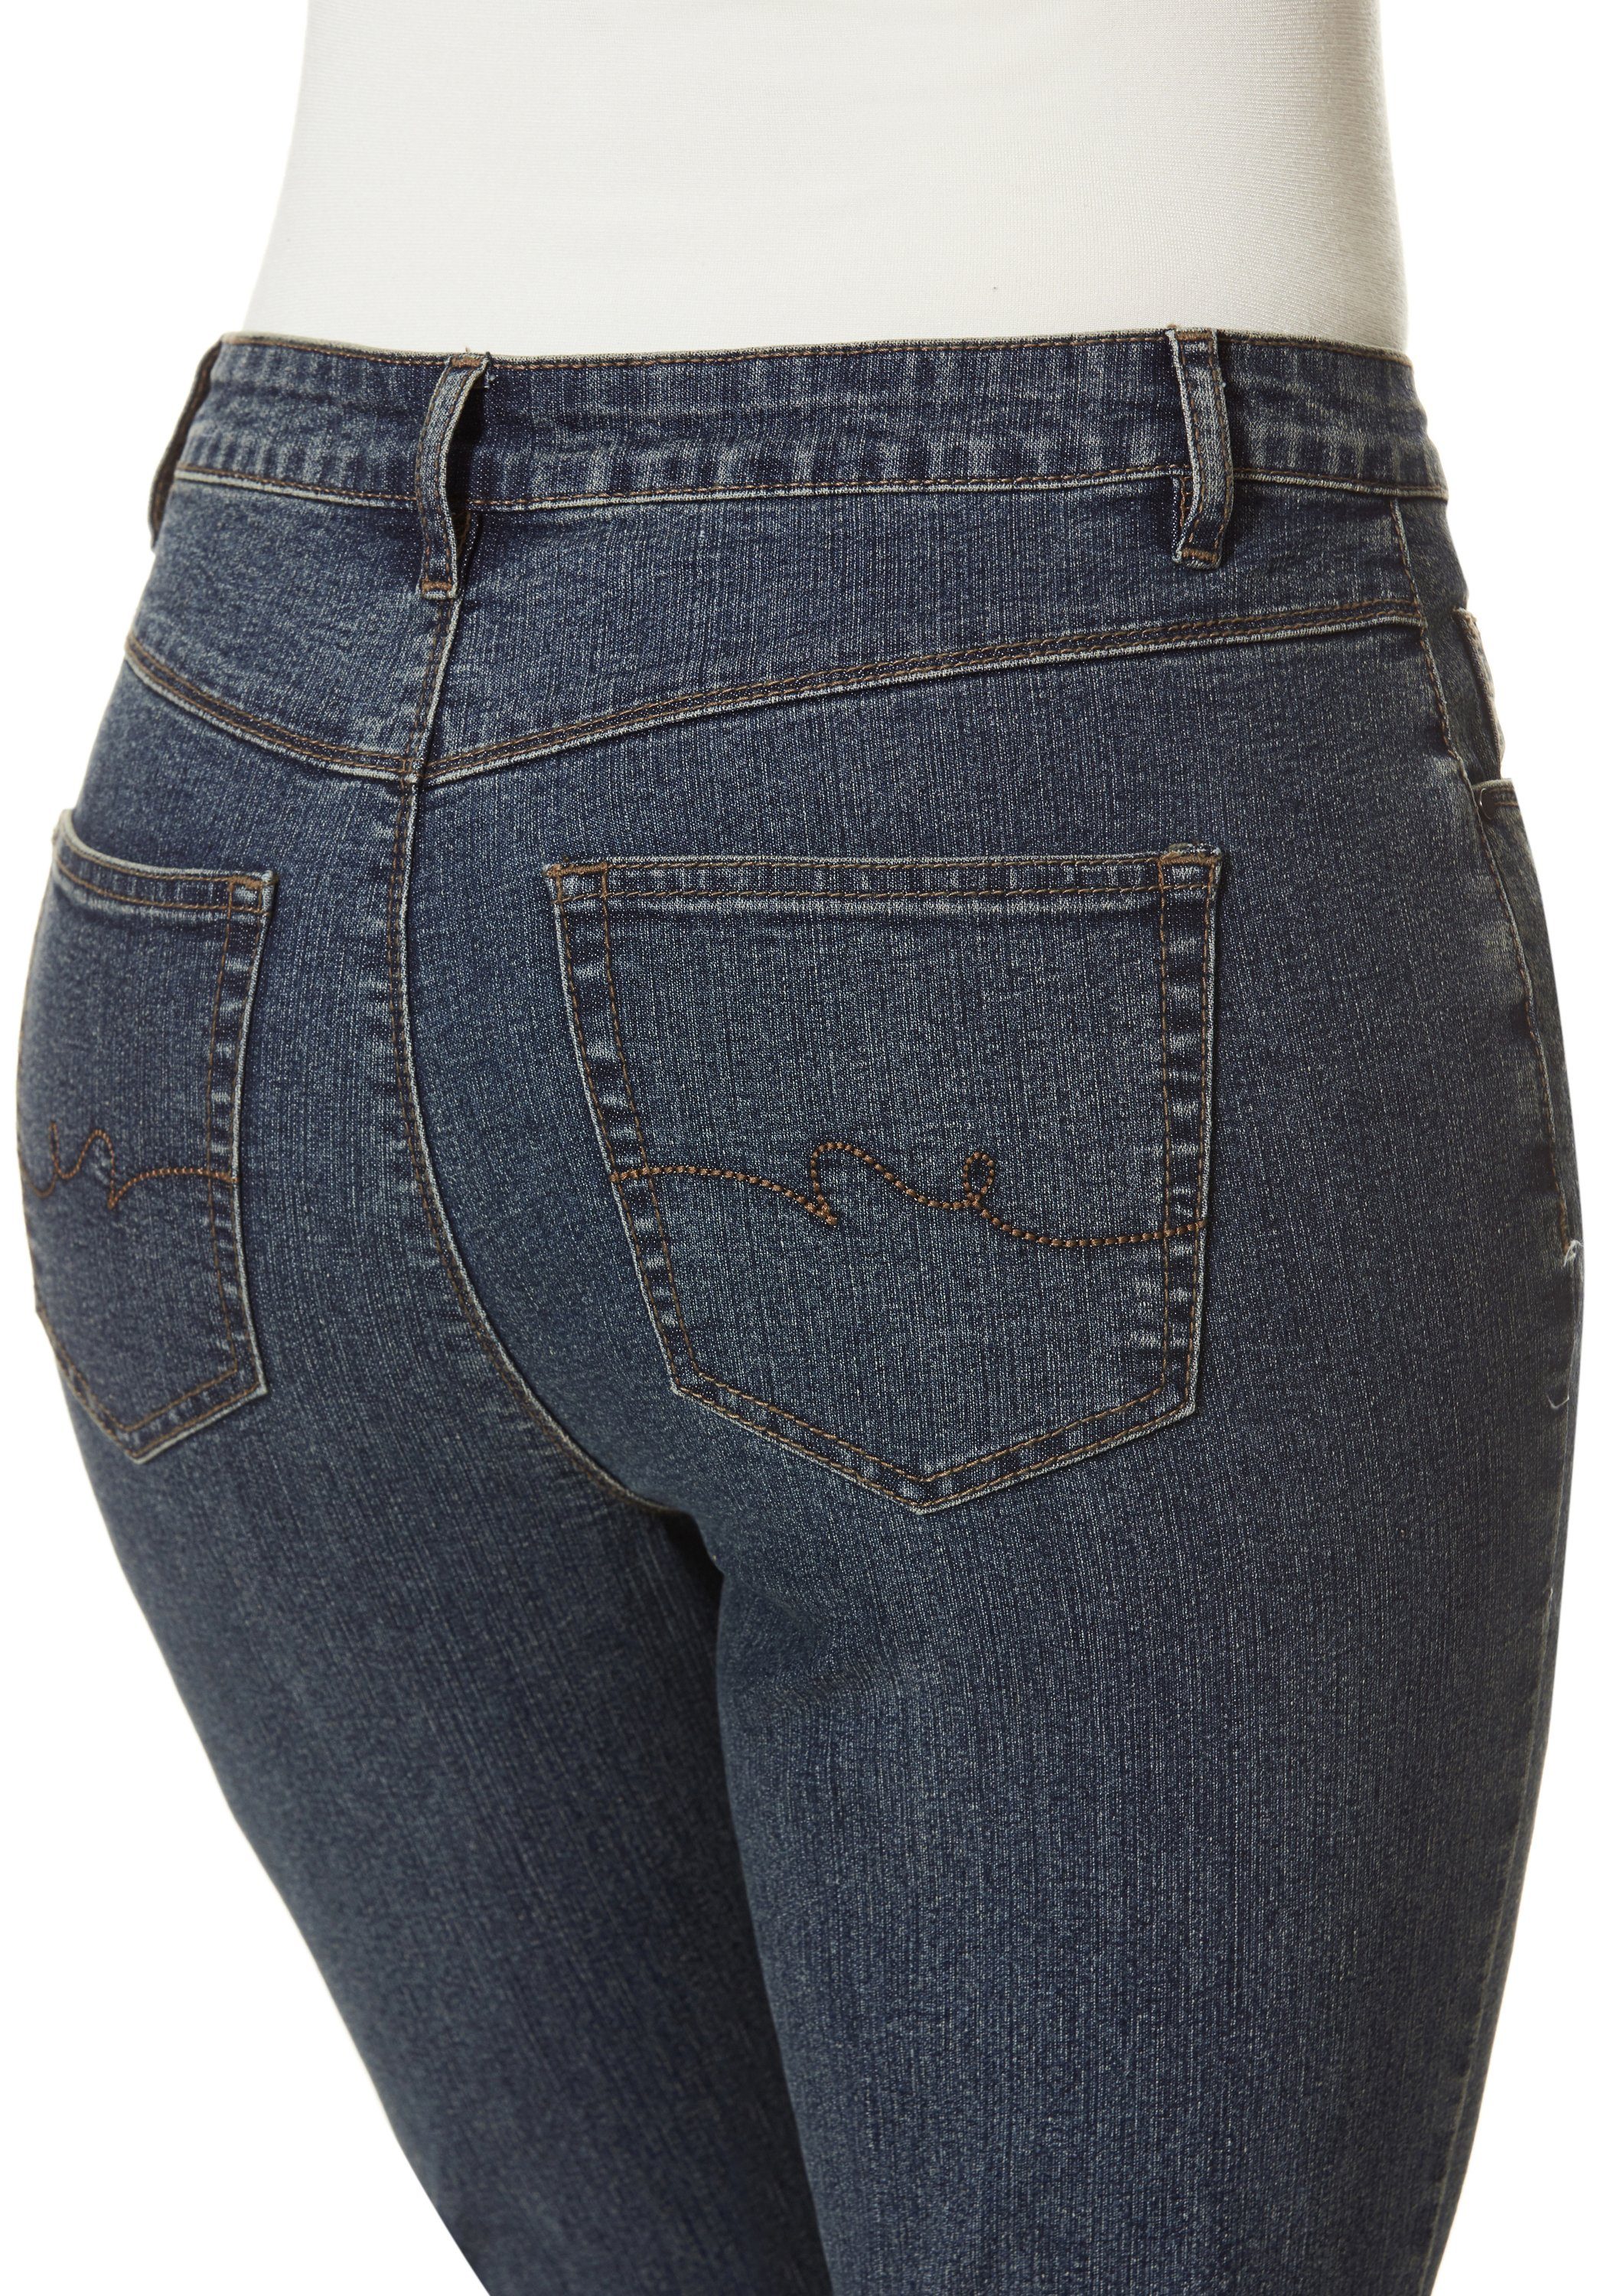 blue 5-Pocket-Jeans Denim WOMEN Nizza Fit STOOKER stone Tapered